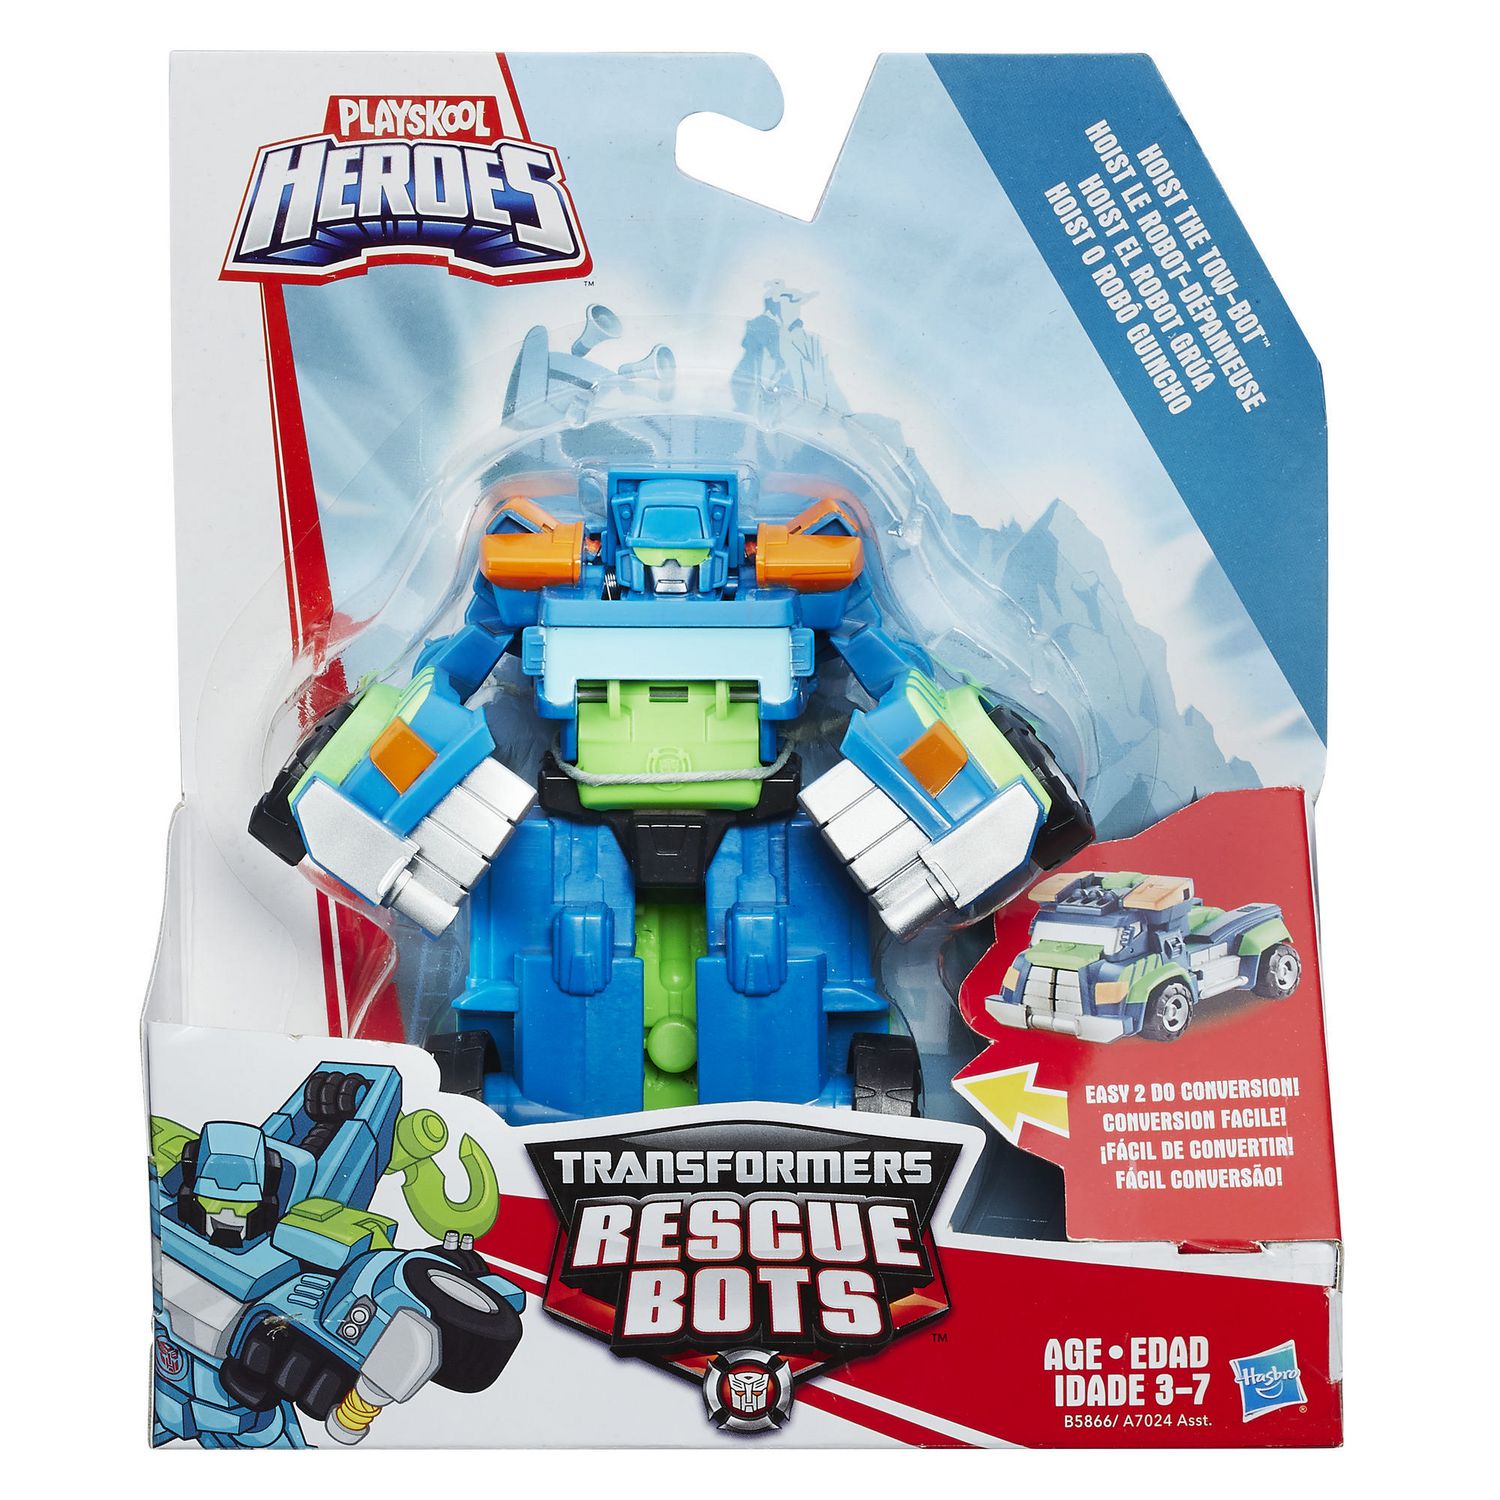 Playshool Playskool Heroes Transformers Rescue Bots Hoist The Tow